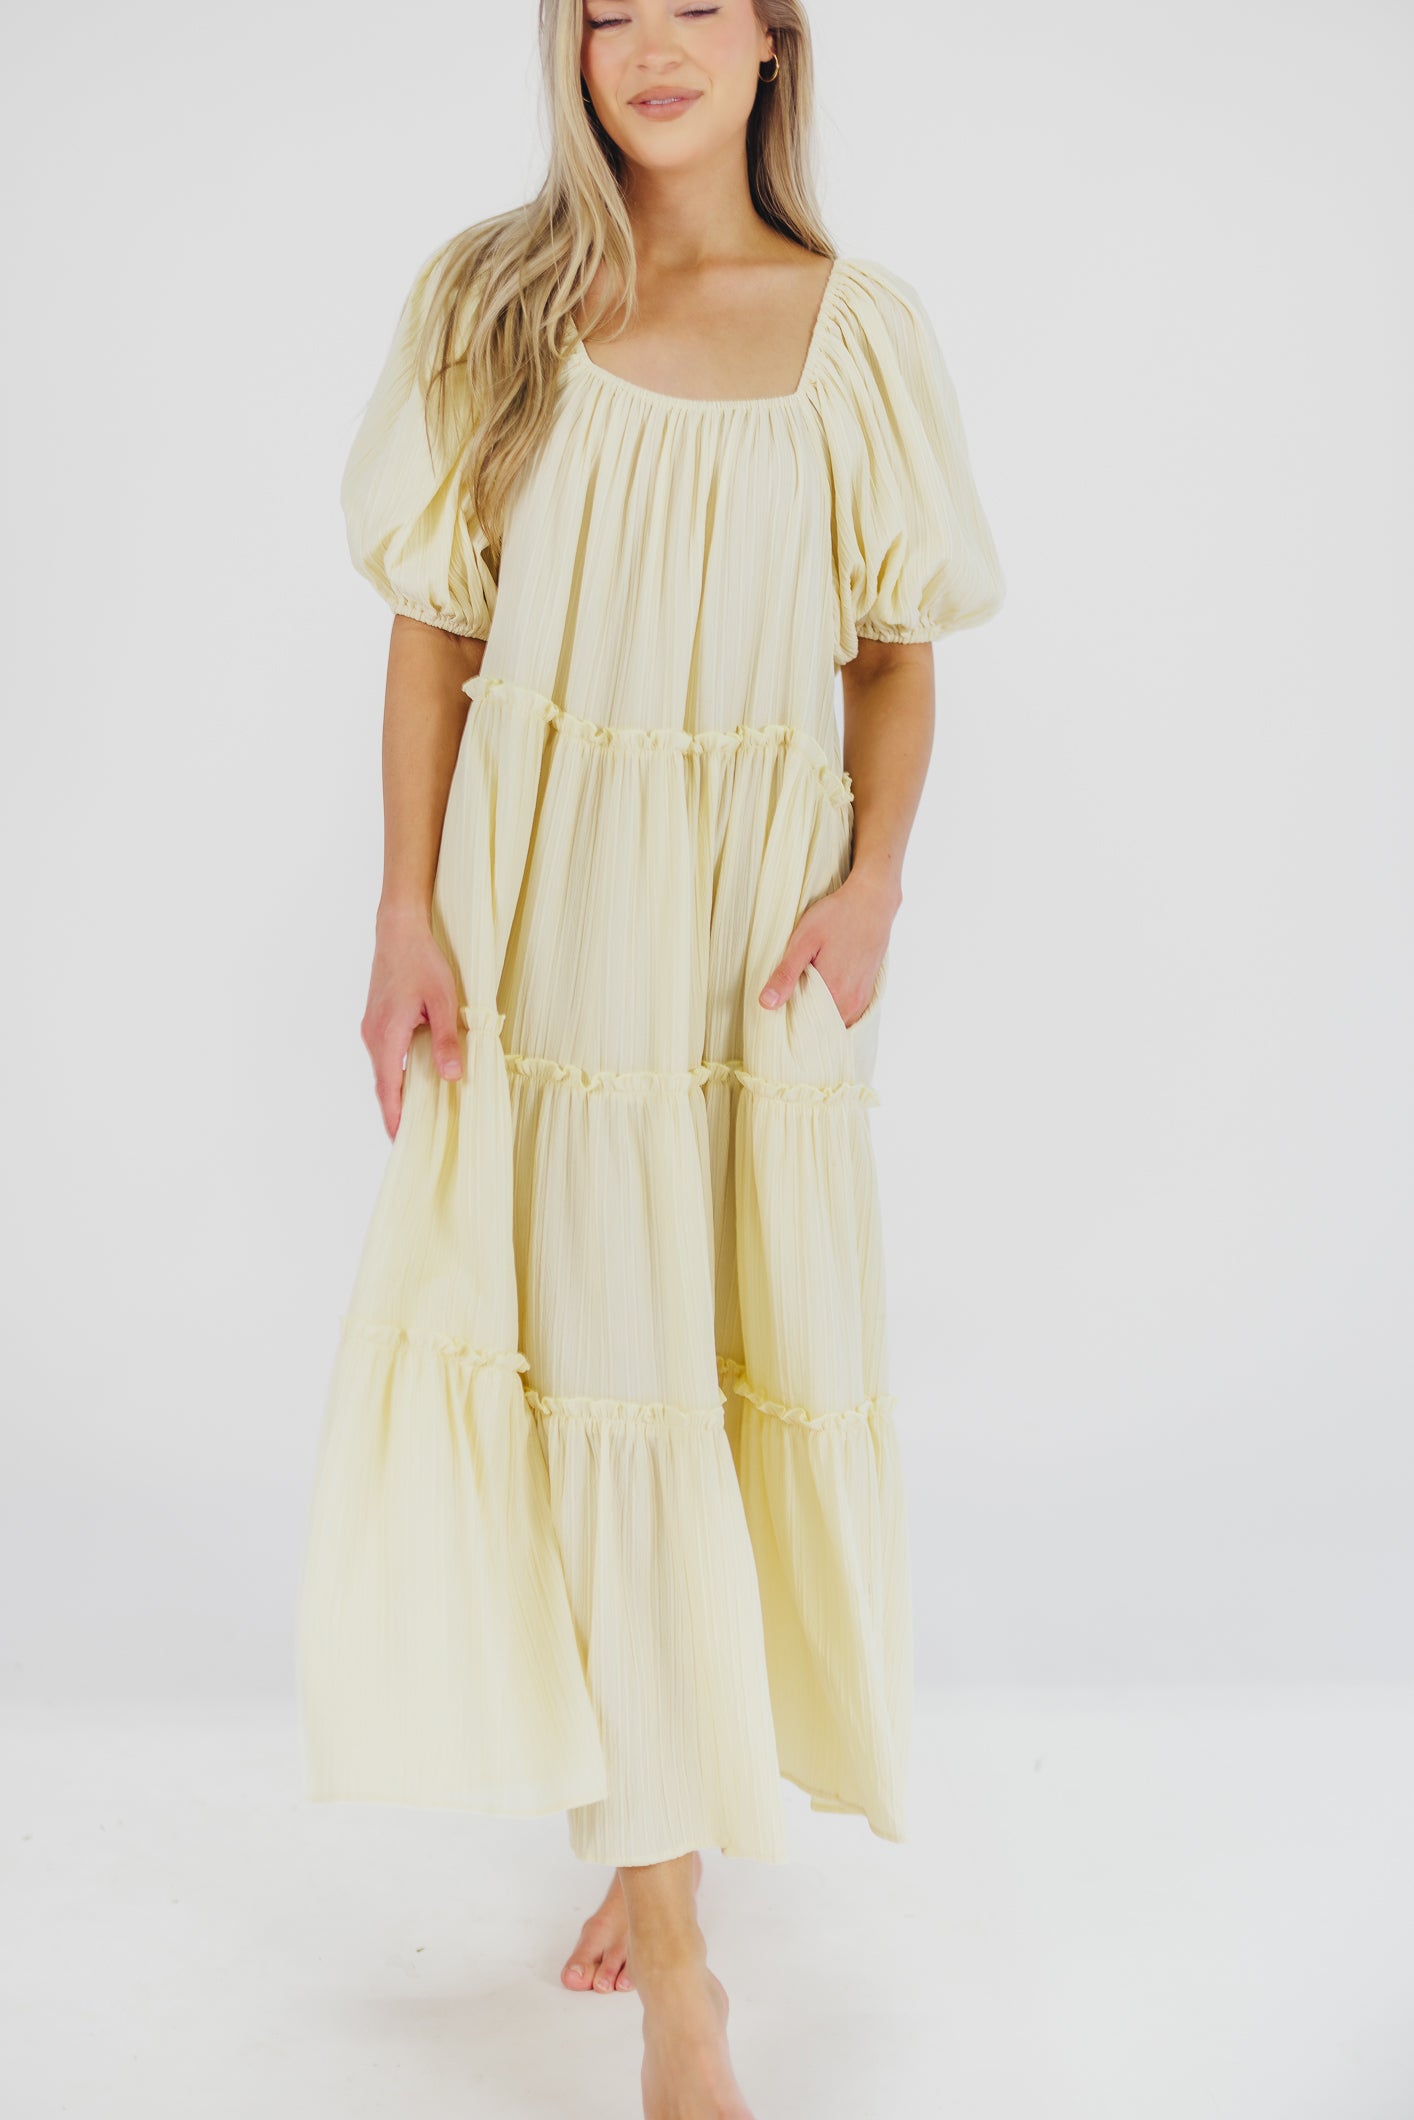 Eva Puffed Sleeve Maxi Dress in Pale Yellow - Bump Friendly & Inclusive Sizing (S-3XL)